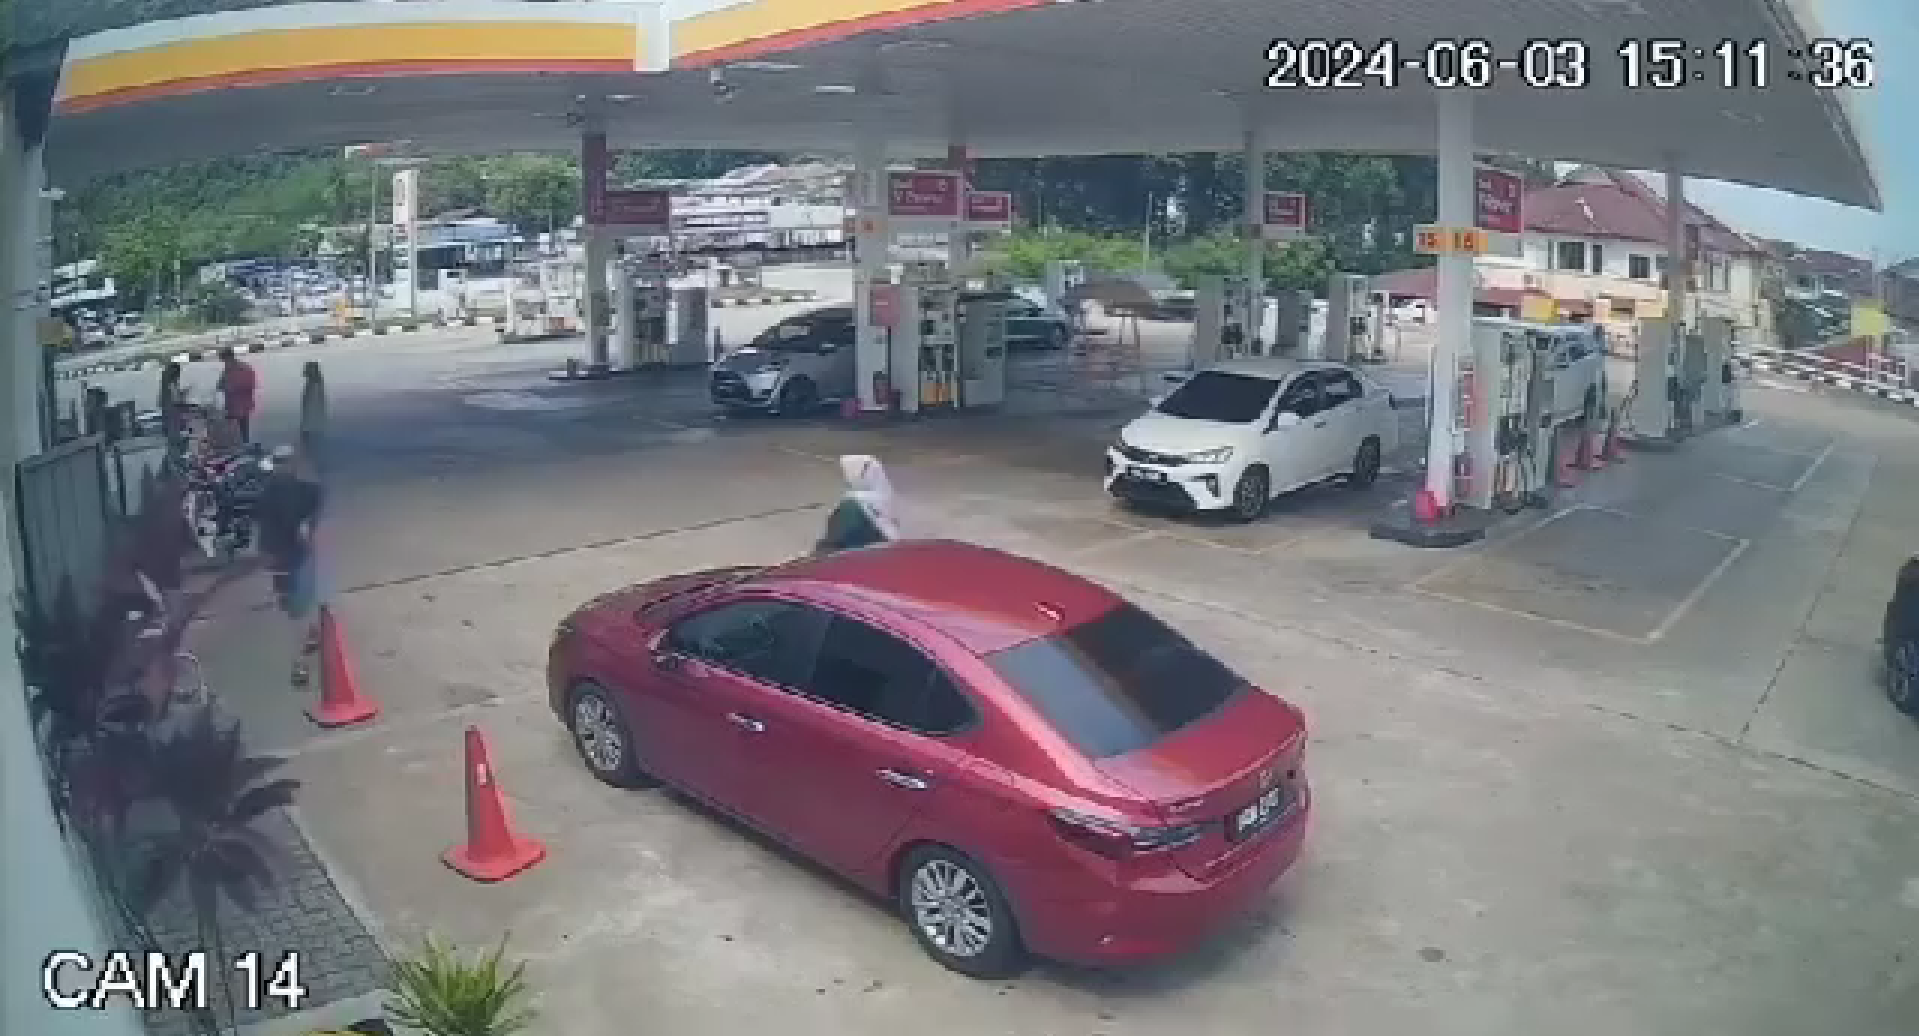 Woman leaving her car